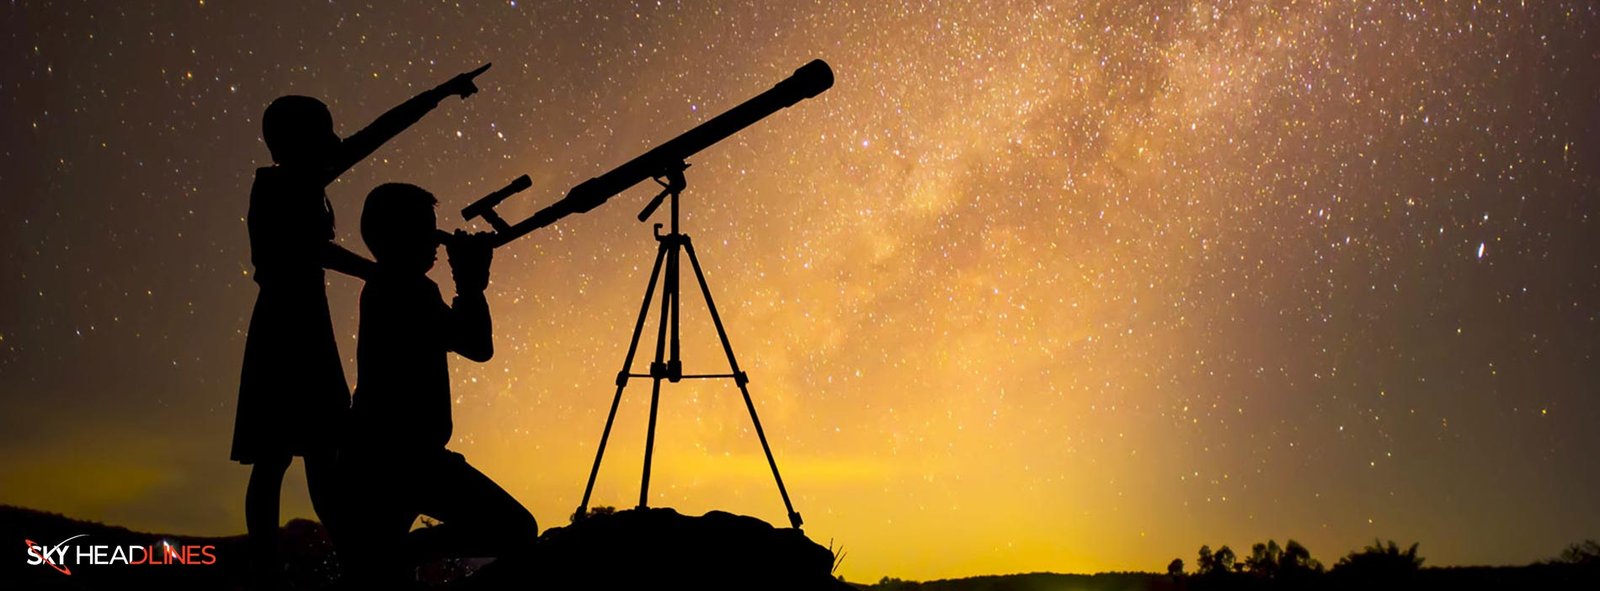 Stargazer Telescope